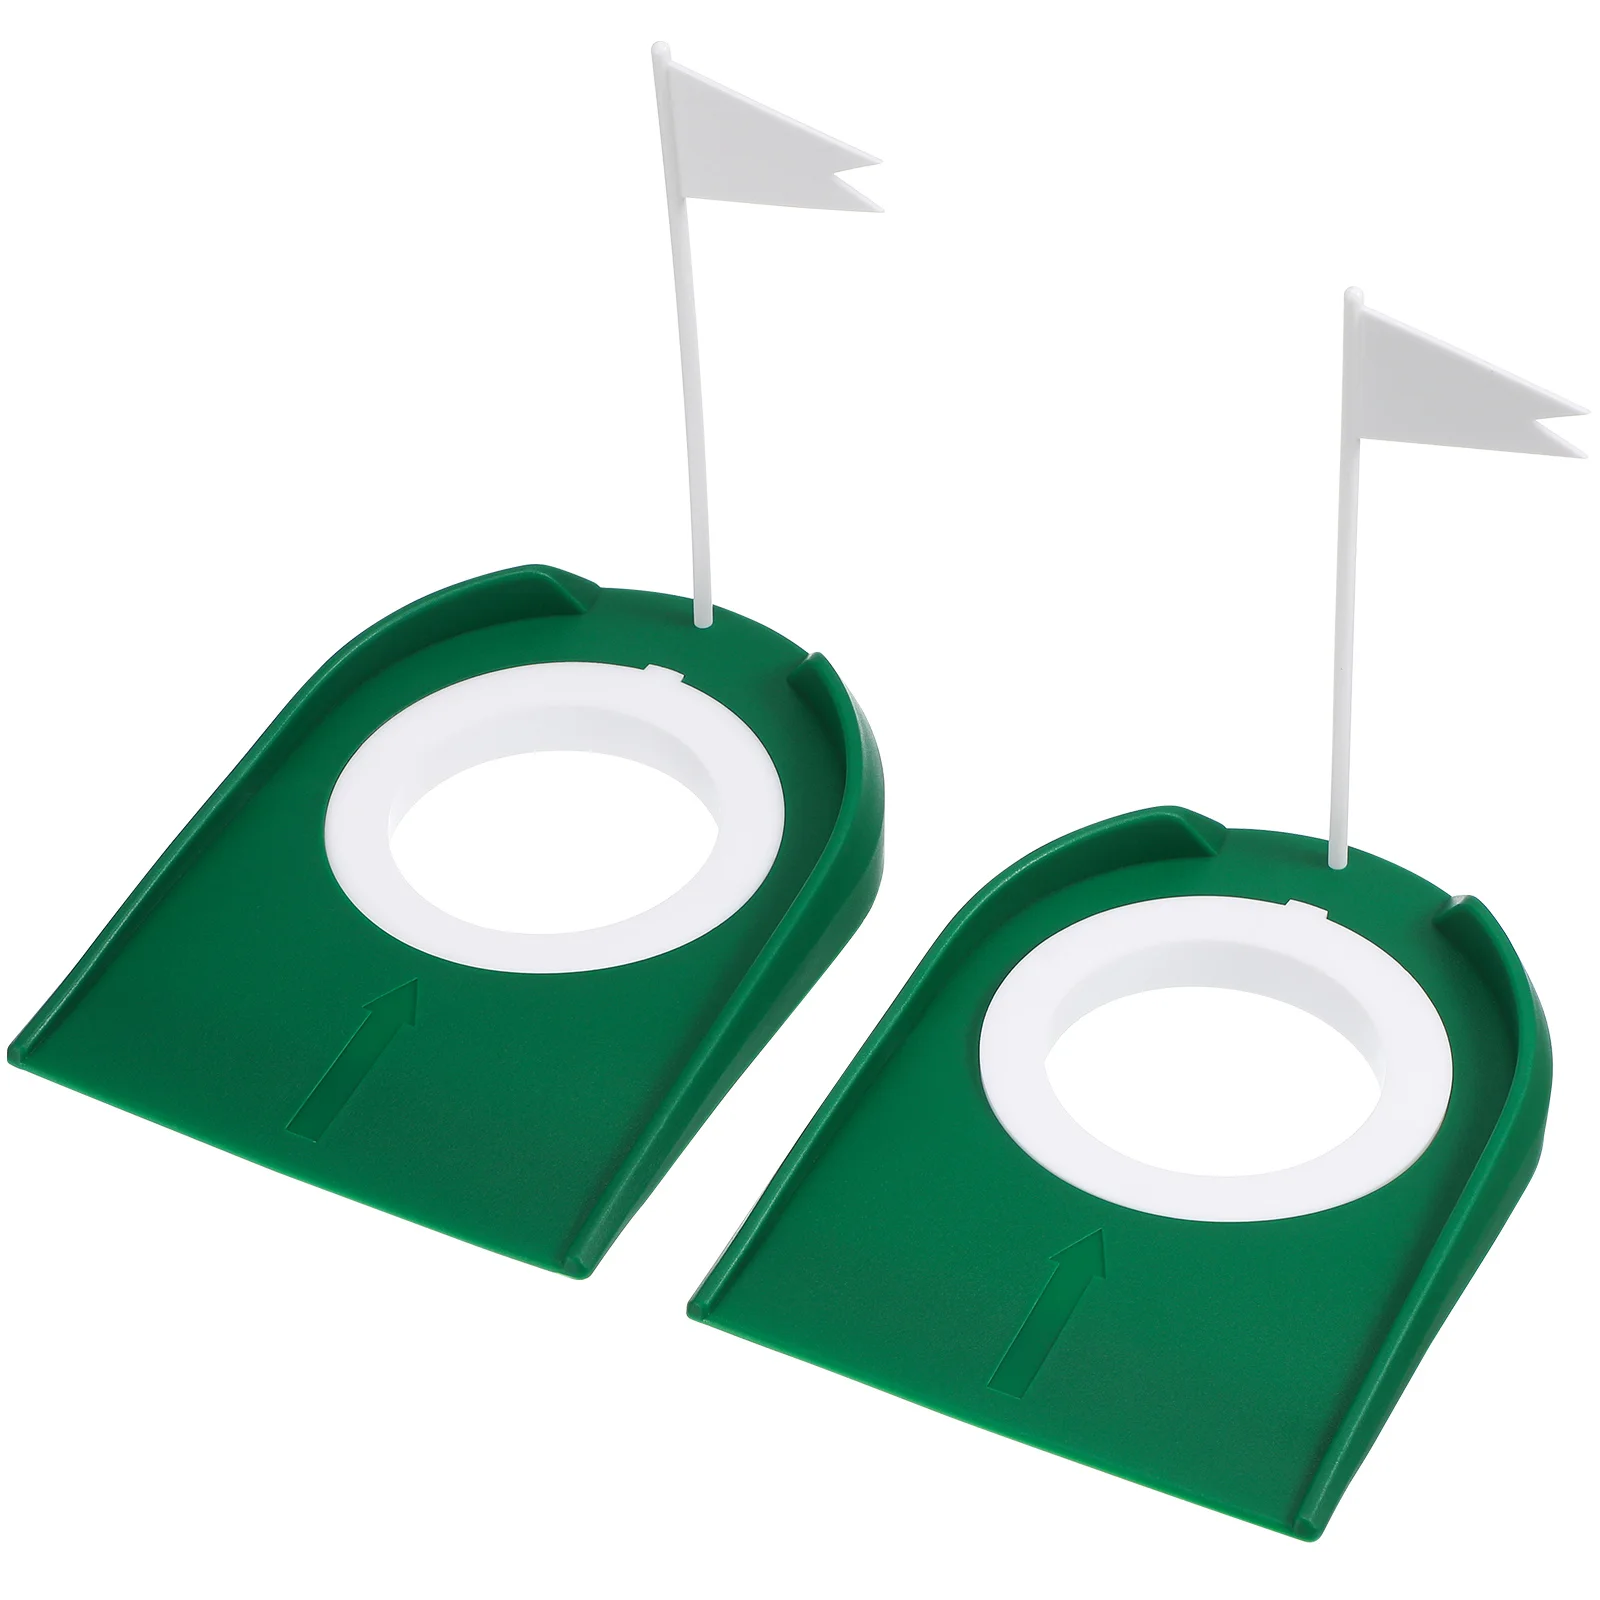 

2 Pcs Golf Putting Disc Plastic Hole Training Aids Putters Accessories Indoor Golfs Balls Practice